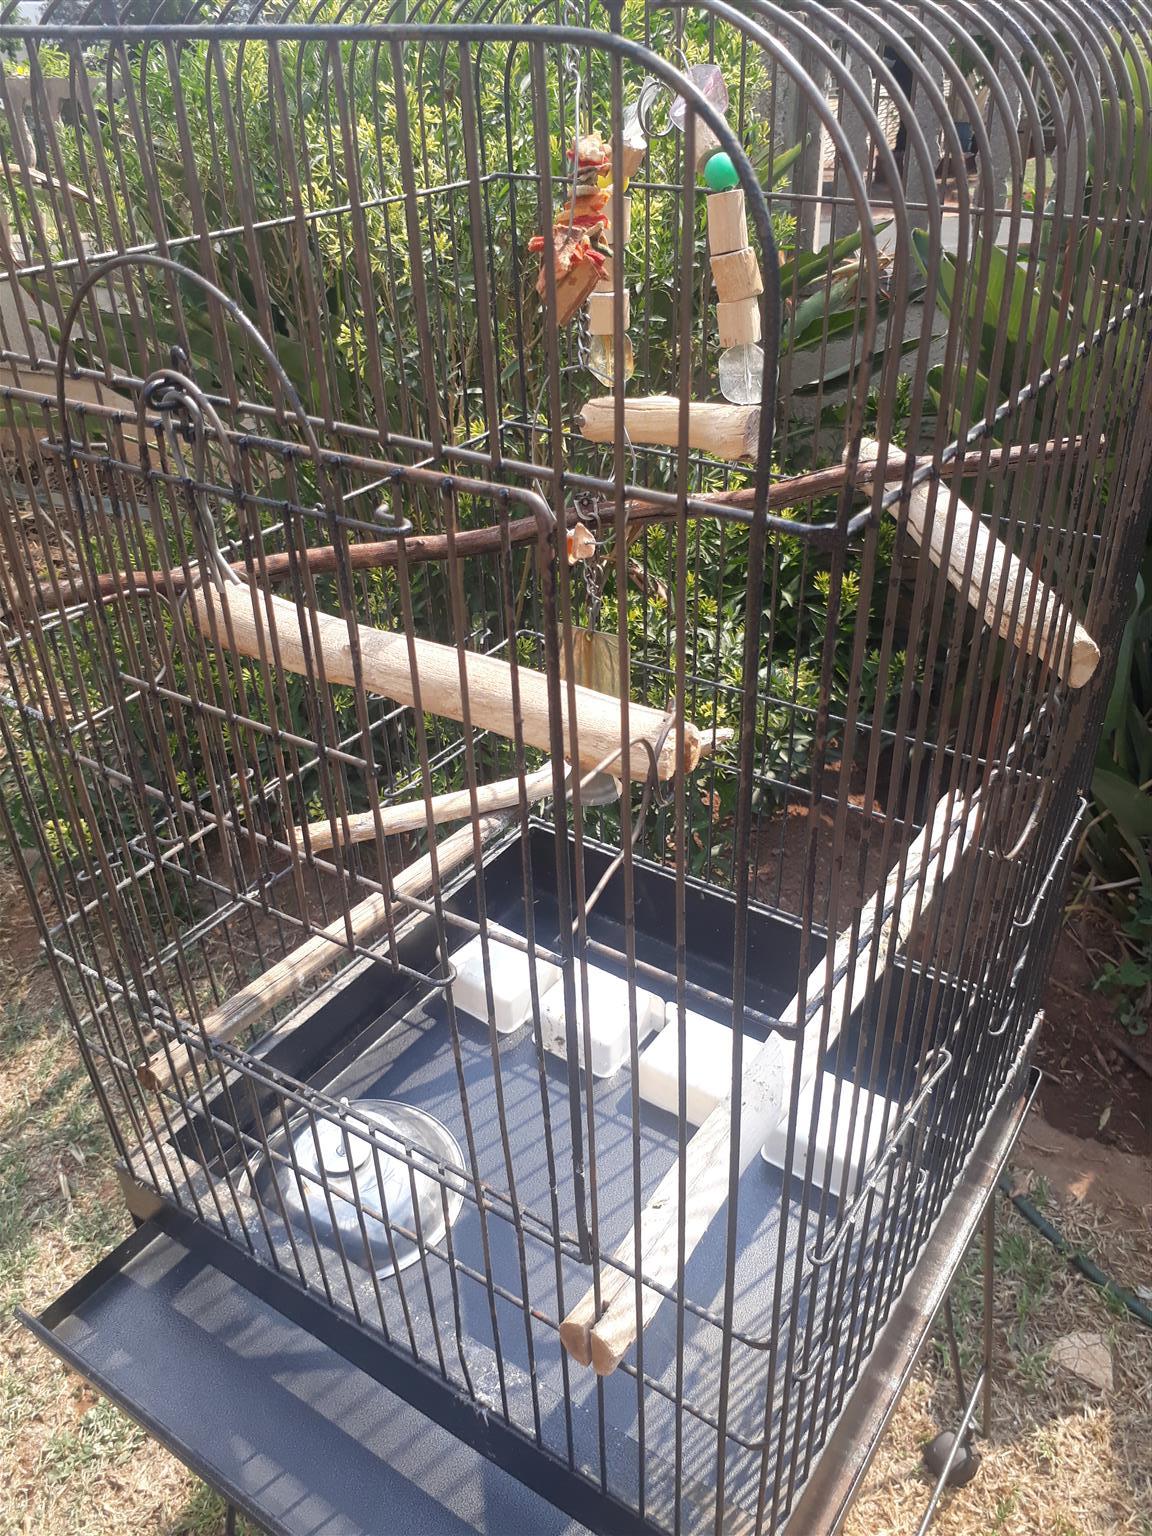 preloved parrot cages